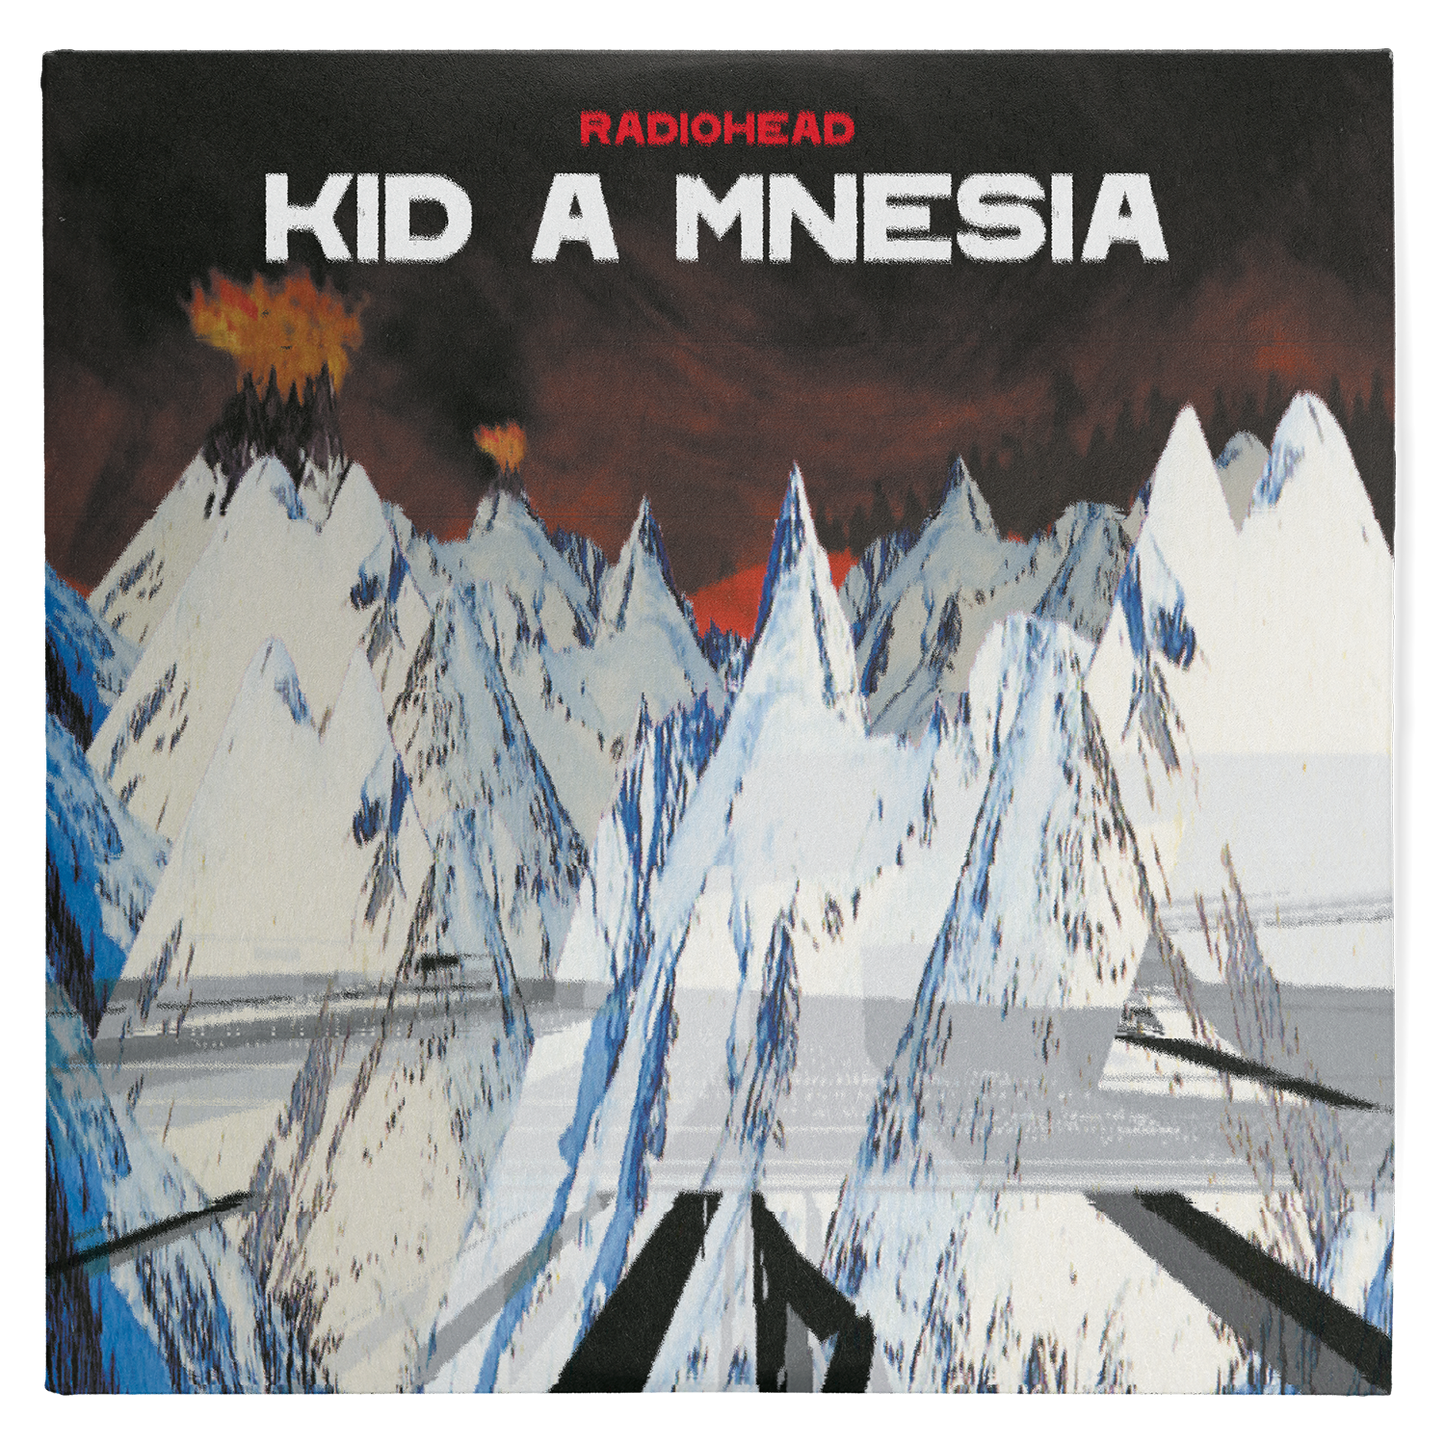 Radiohead Kid A Mnesia - Ireland Vinyl